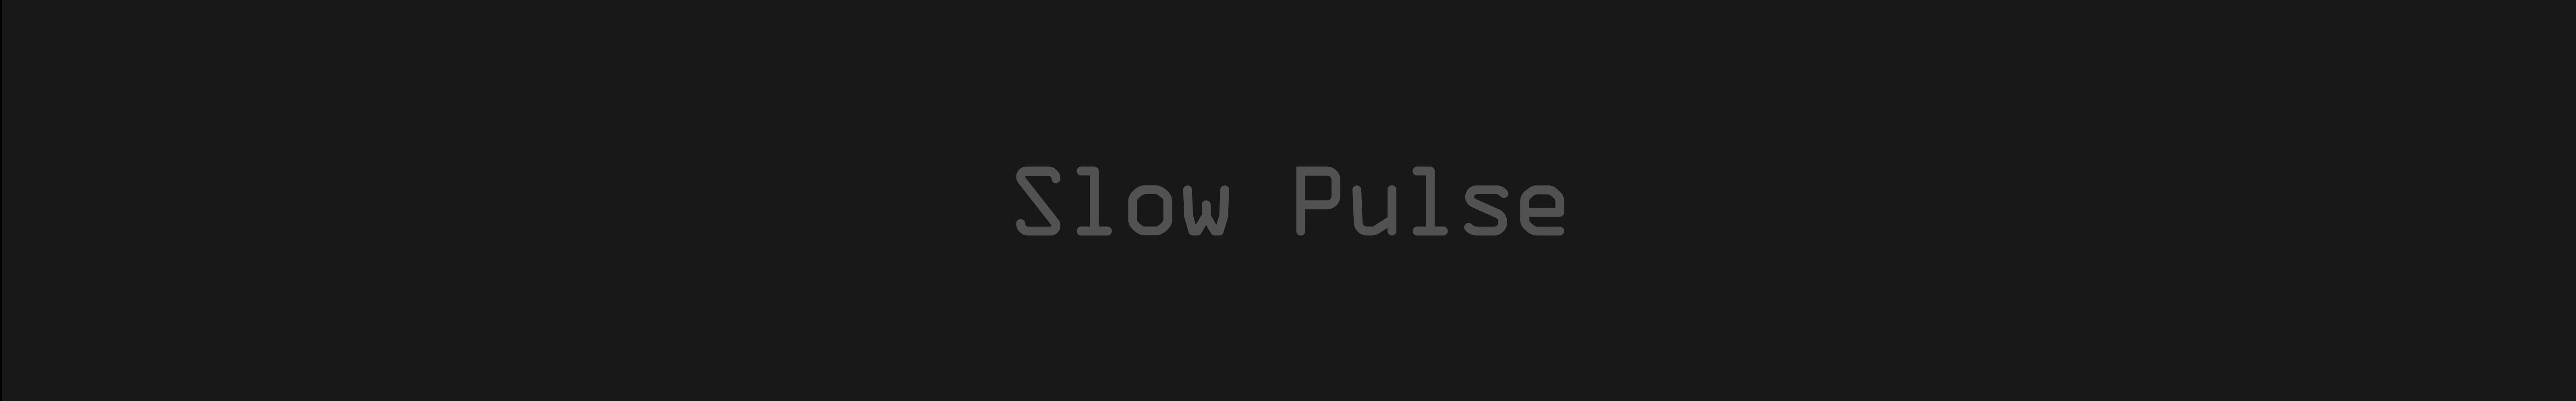 Slow Pulse's profile banner